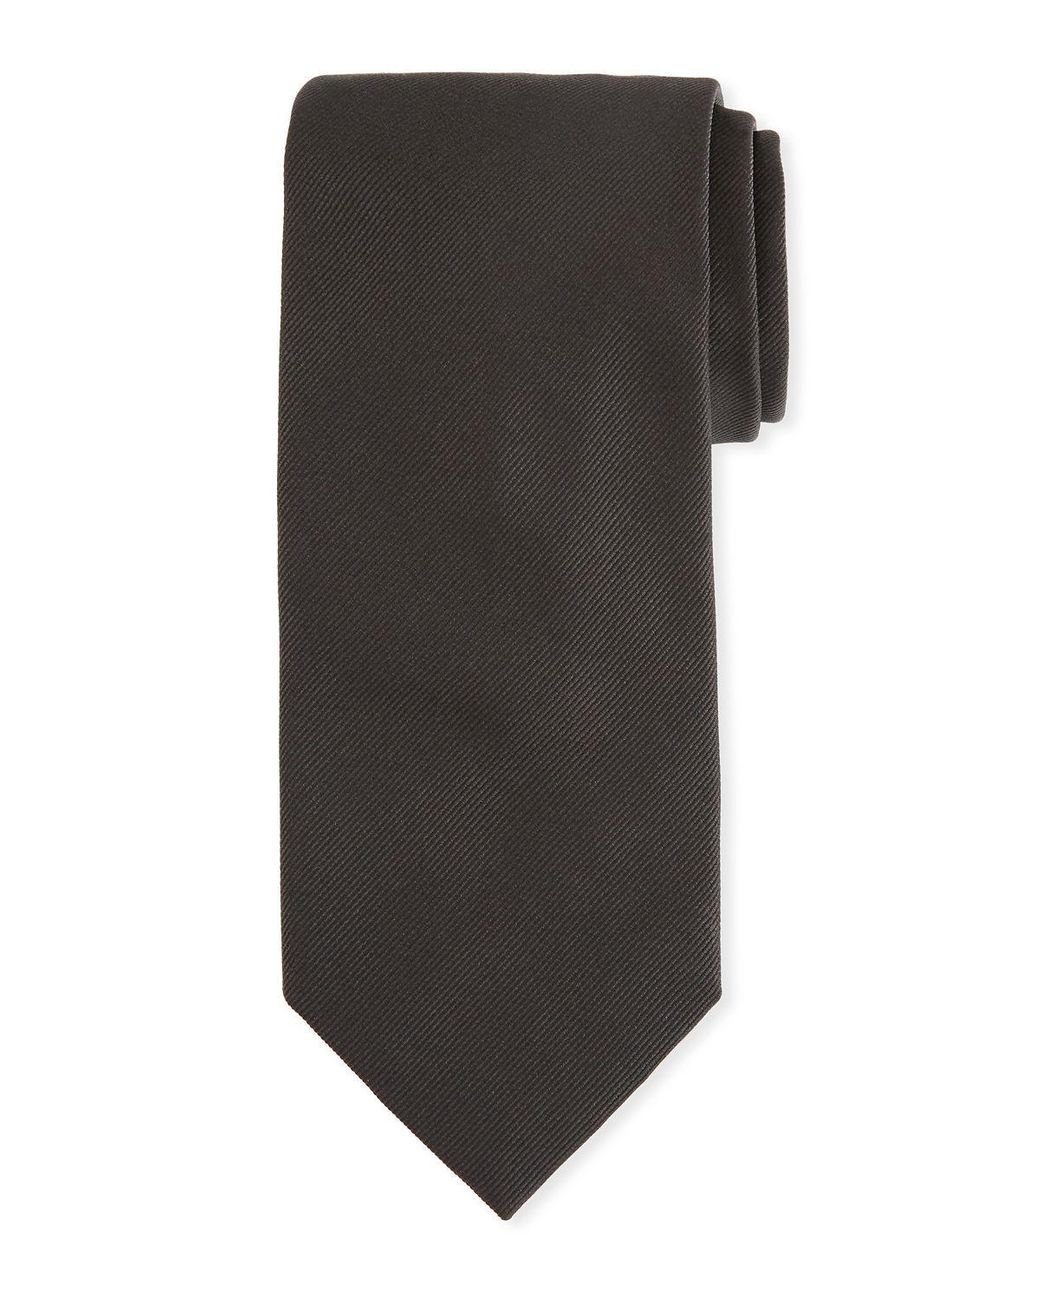 Brioni Solid Textured Silk Tie in Black for Men - Lyst